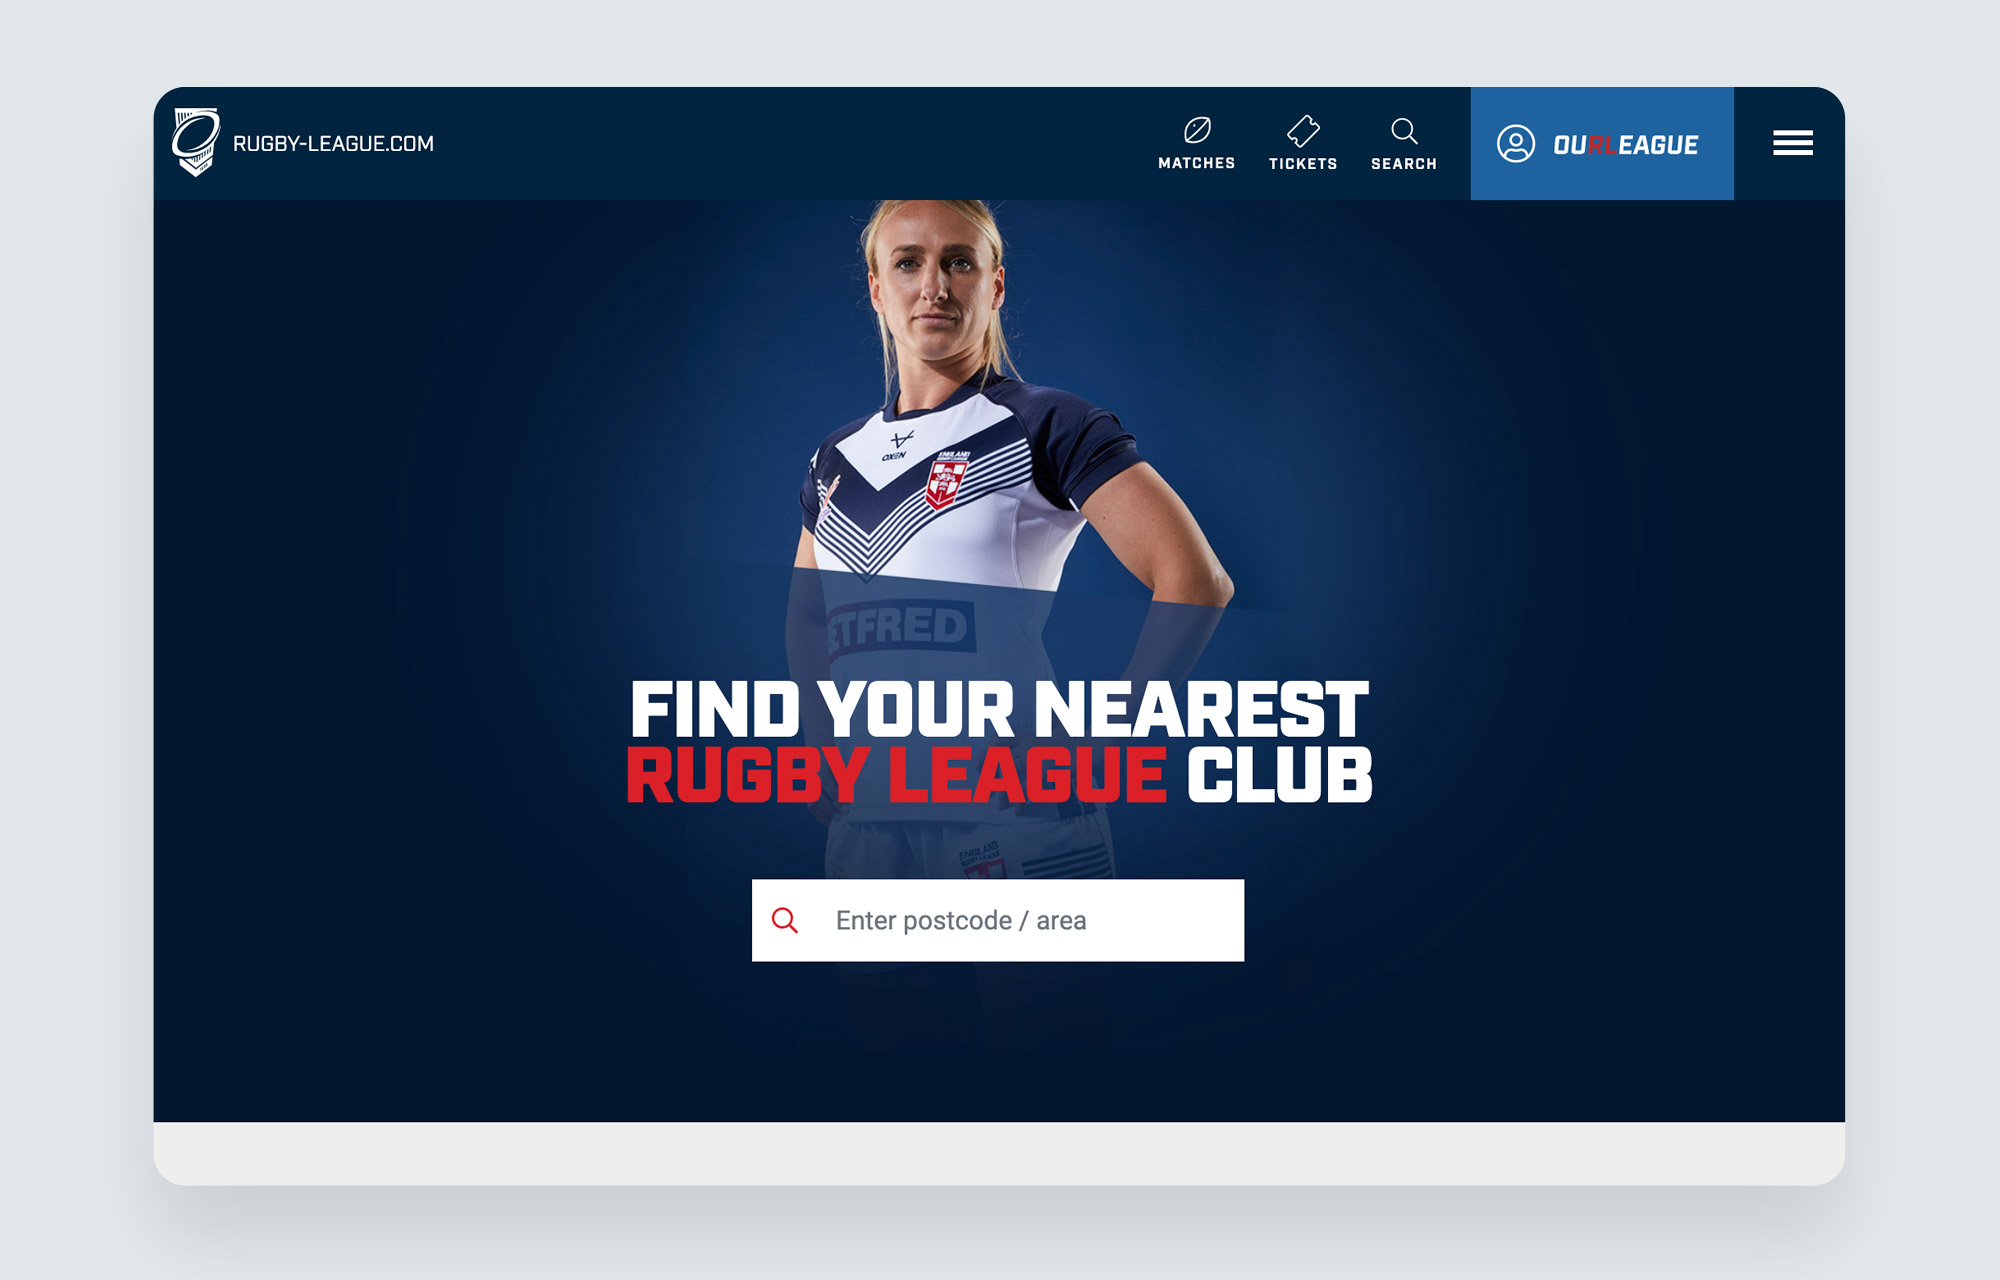 Rugby League Club Finder